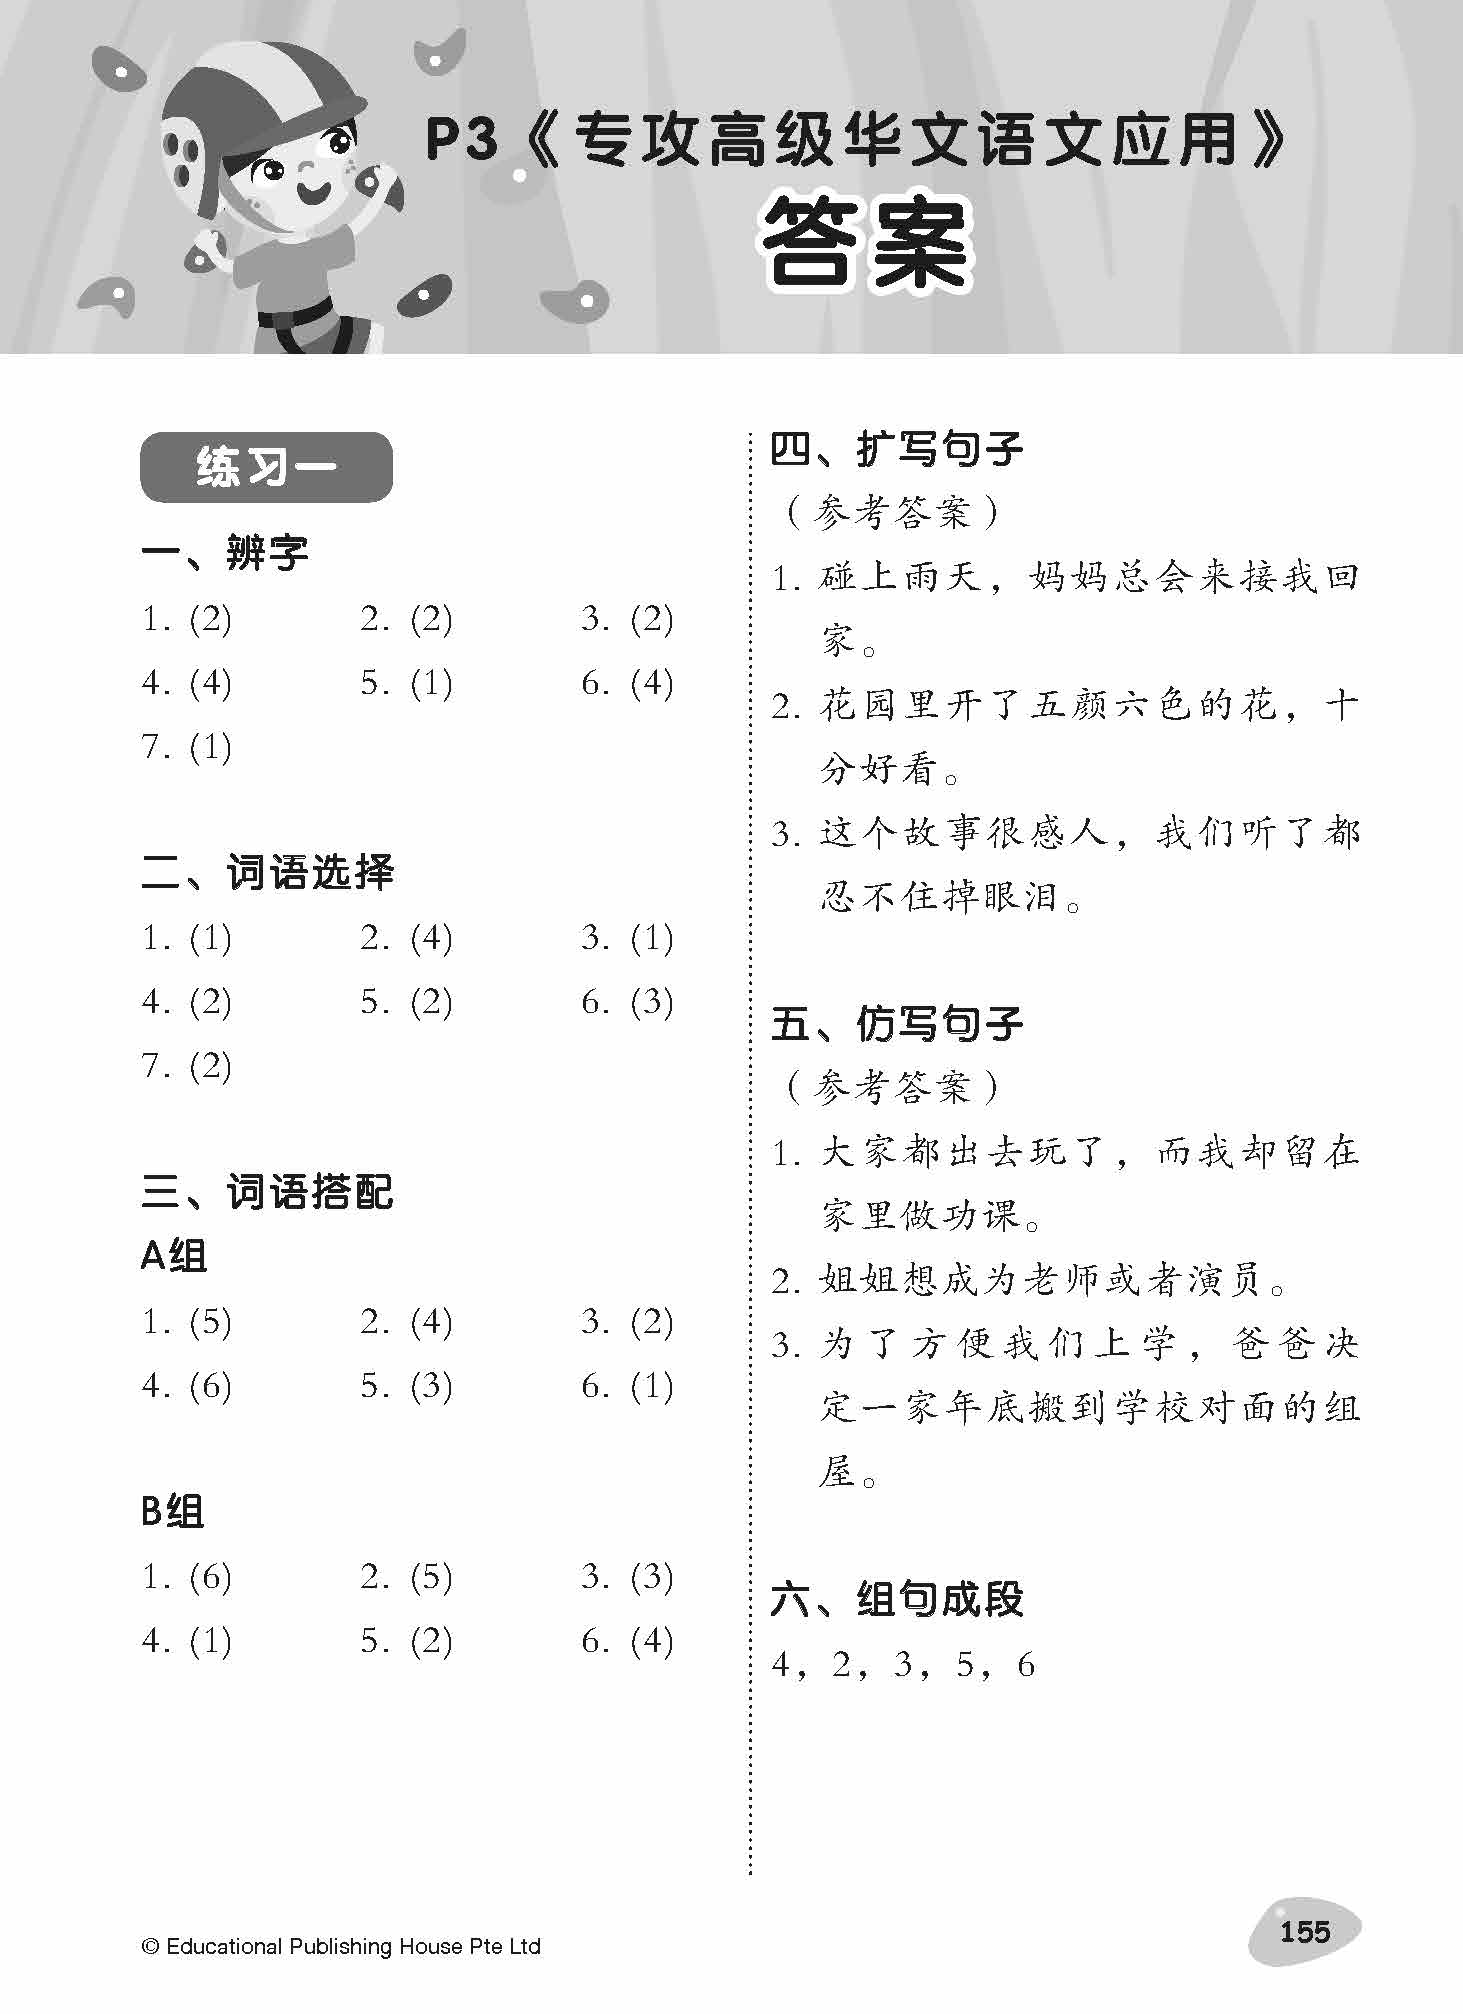 Primary 3 Tackling Higher Chinese Language Usage 专攻高级华文语文应用